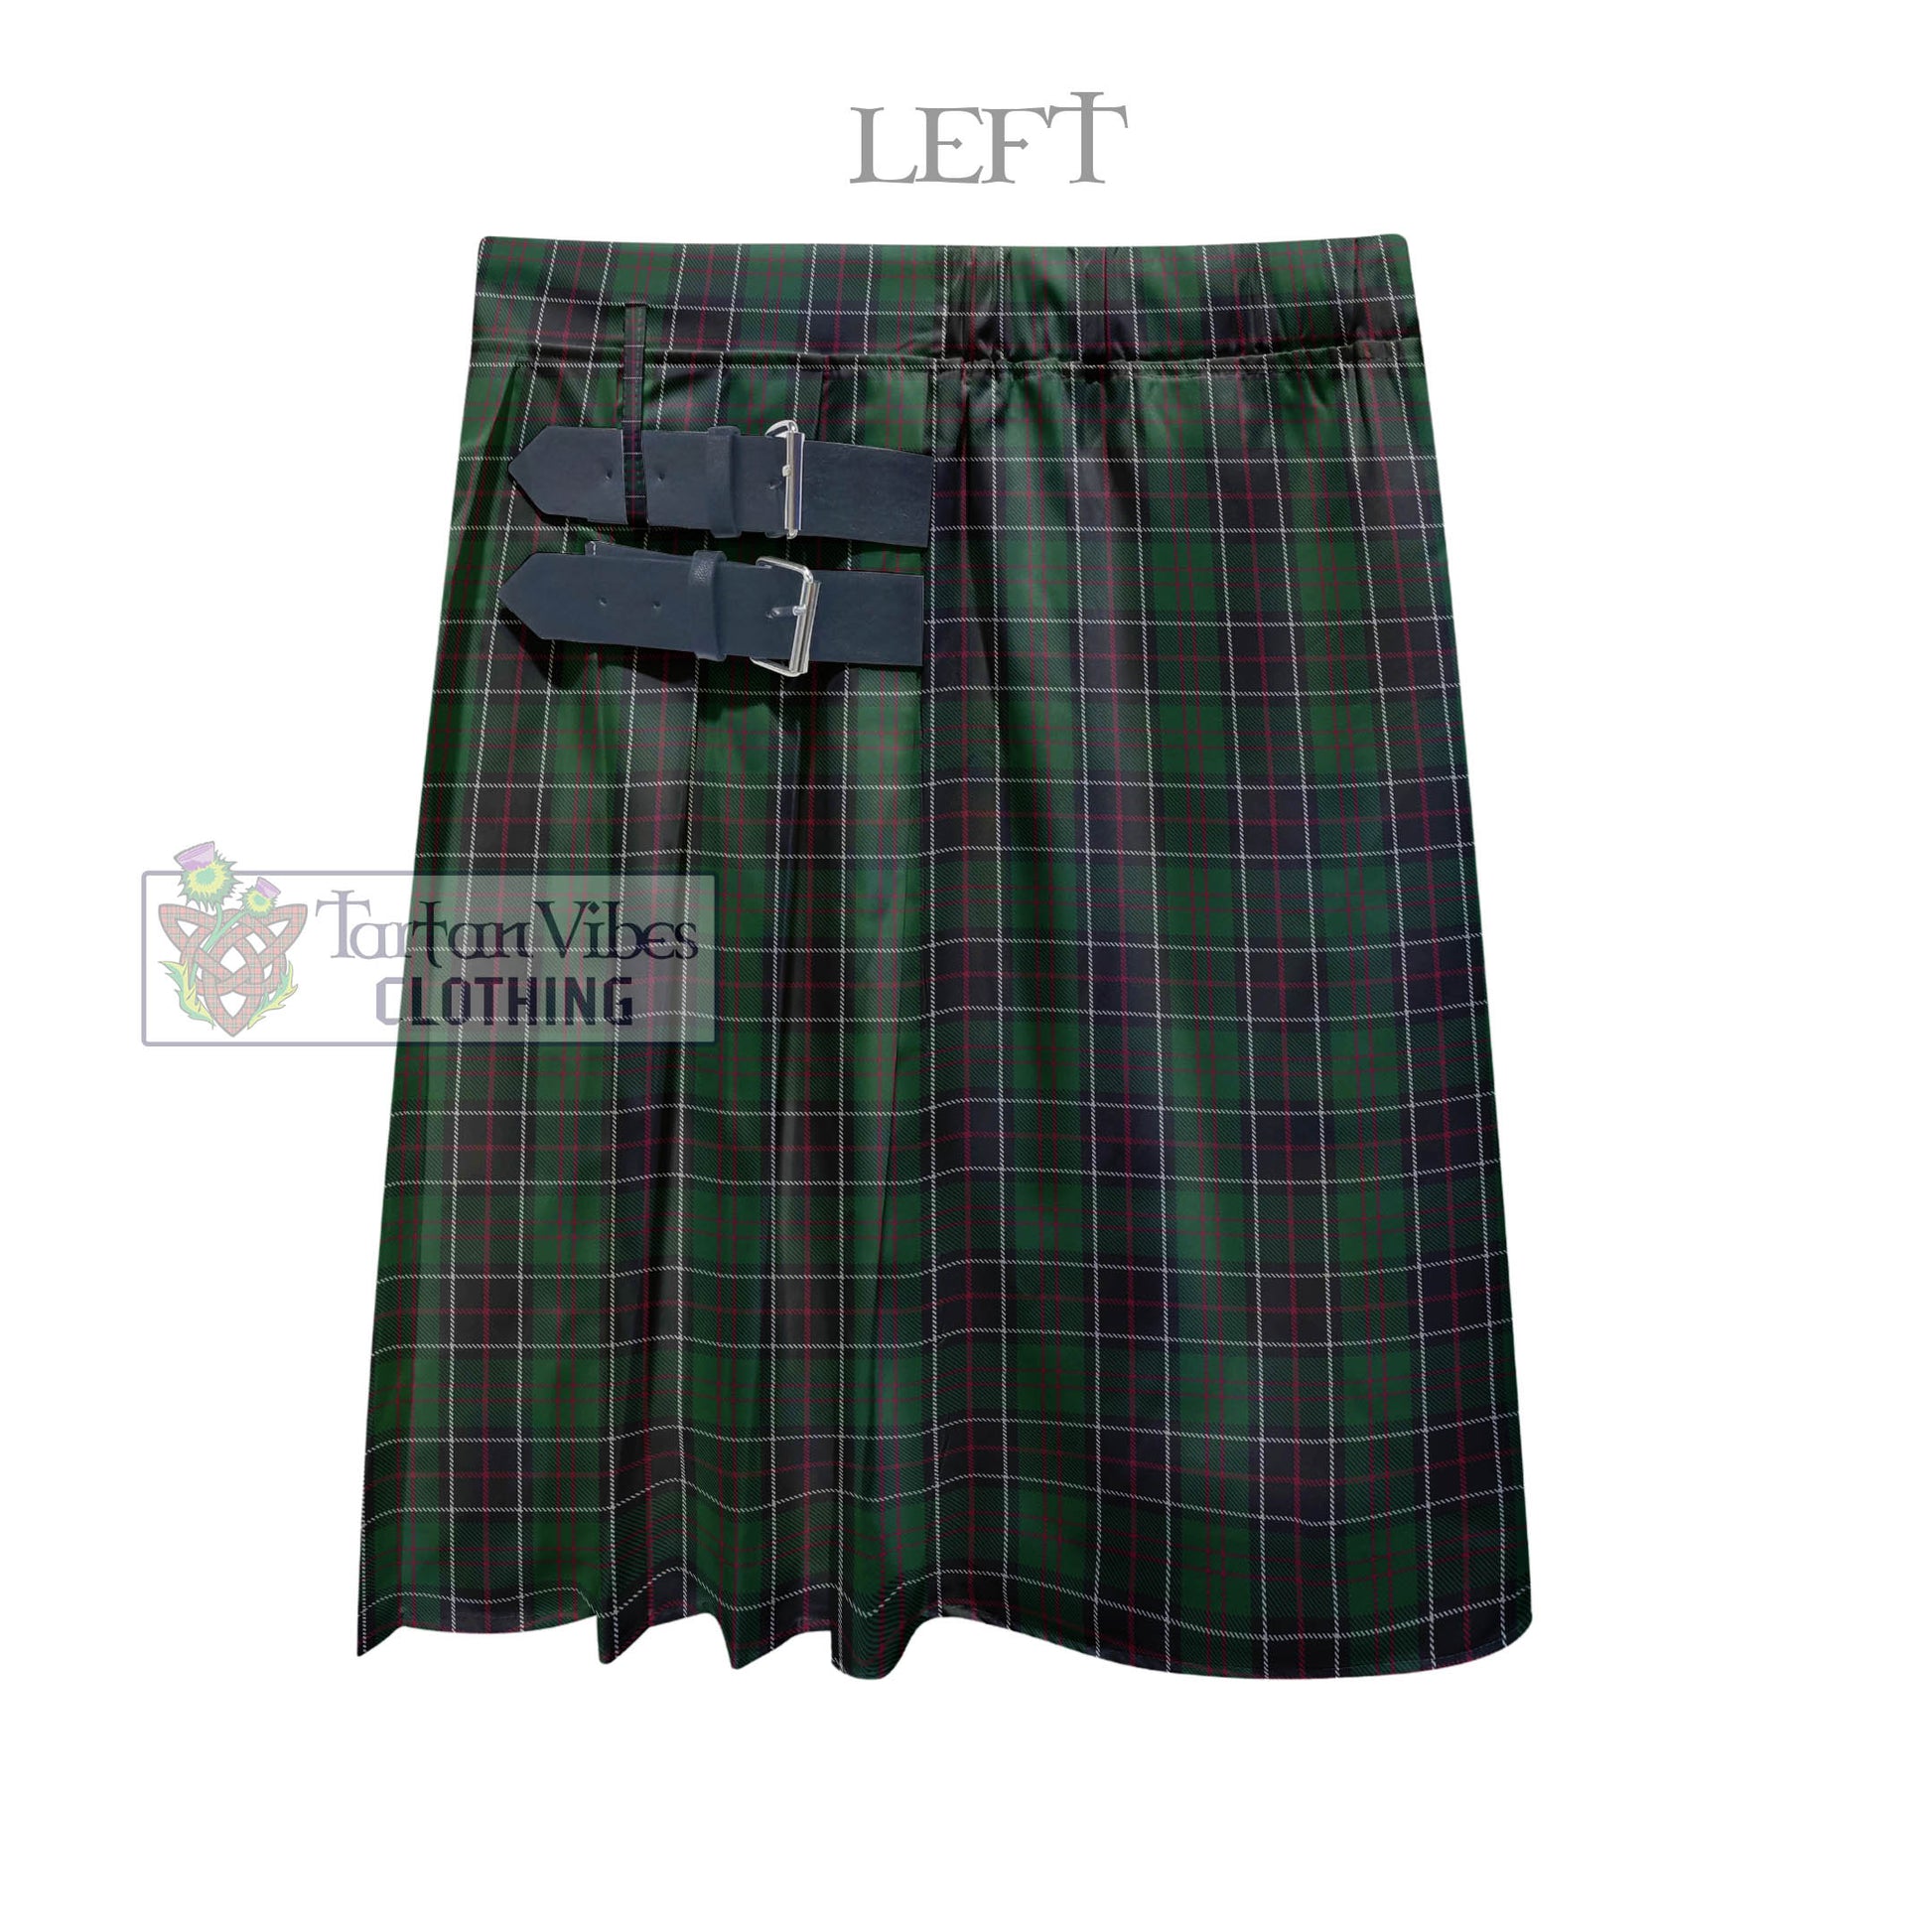 Tartan Vibes Clothing Sinclair Hunting Tartan Men's Pleated Skirt - Fashion Casual Retro Scottish Style